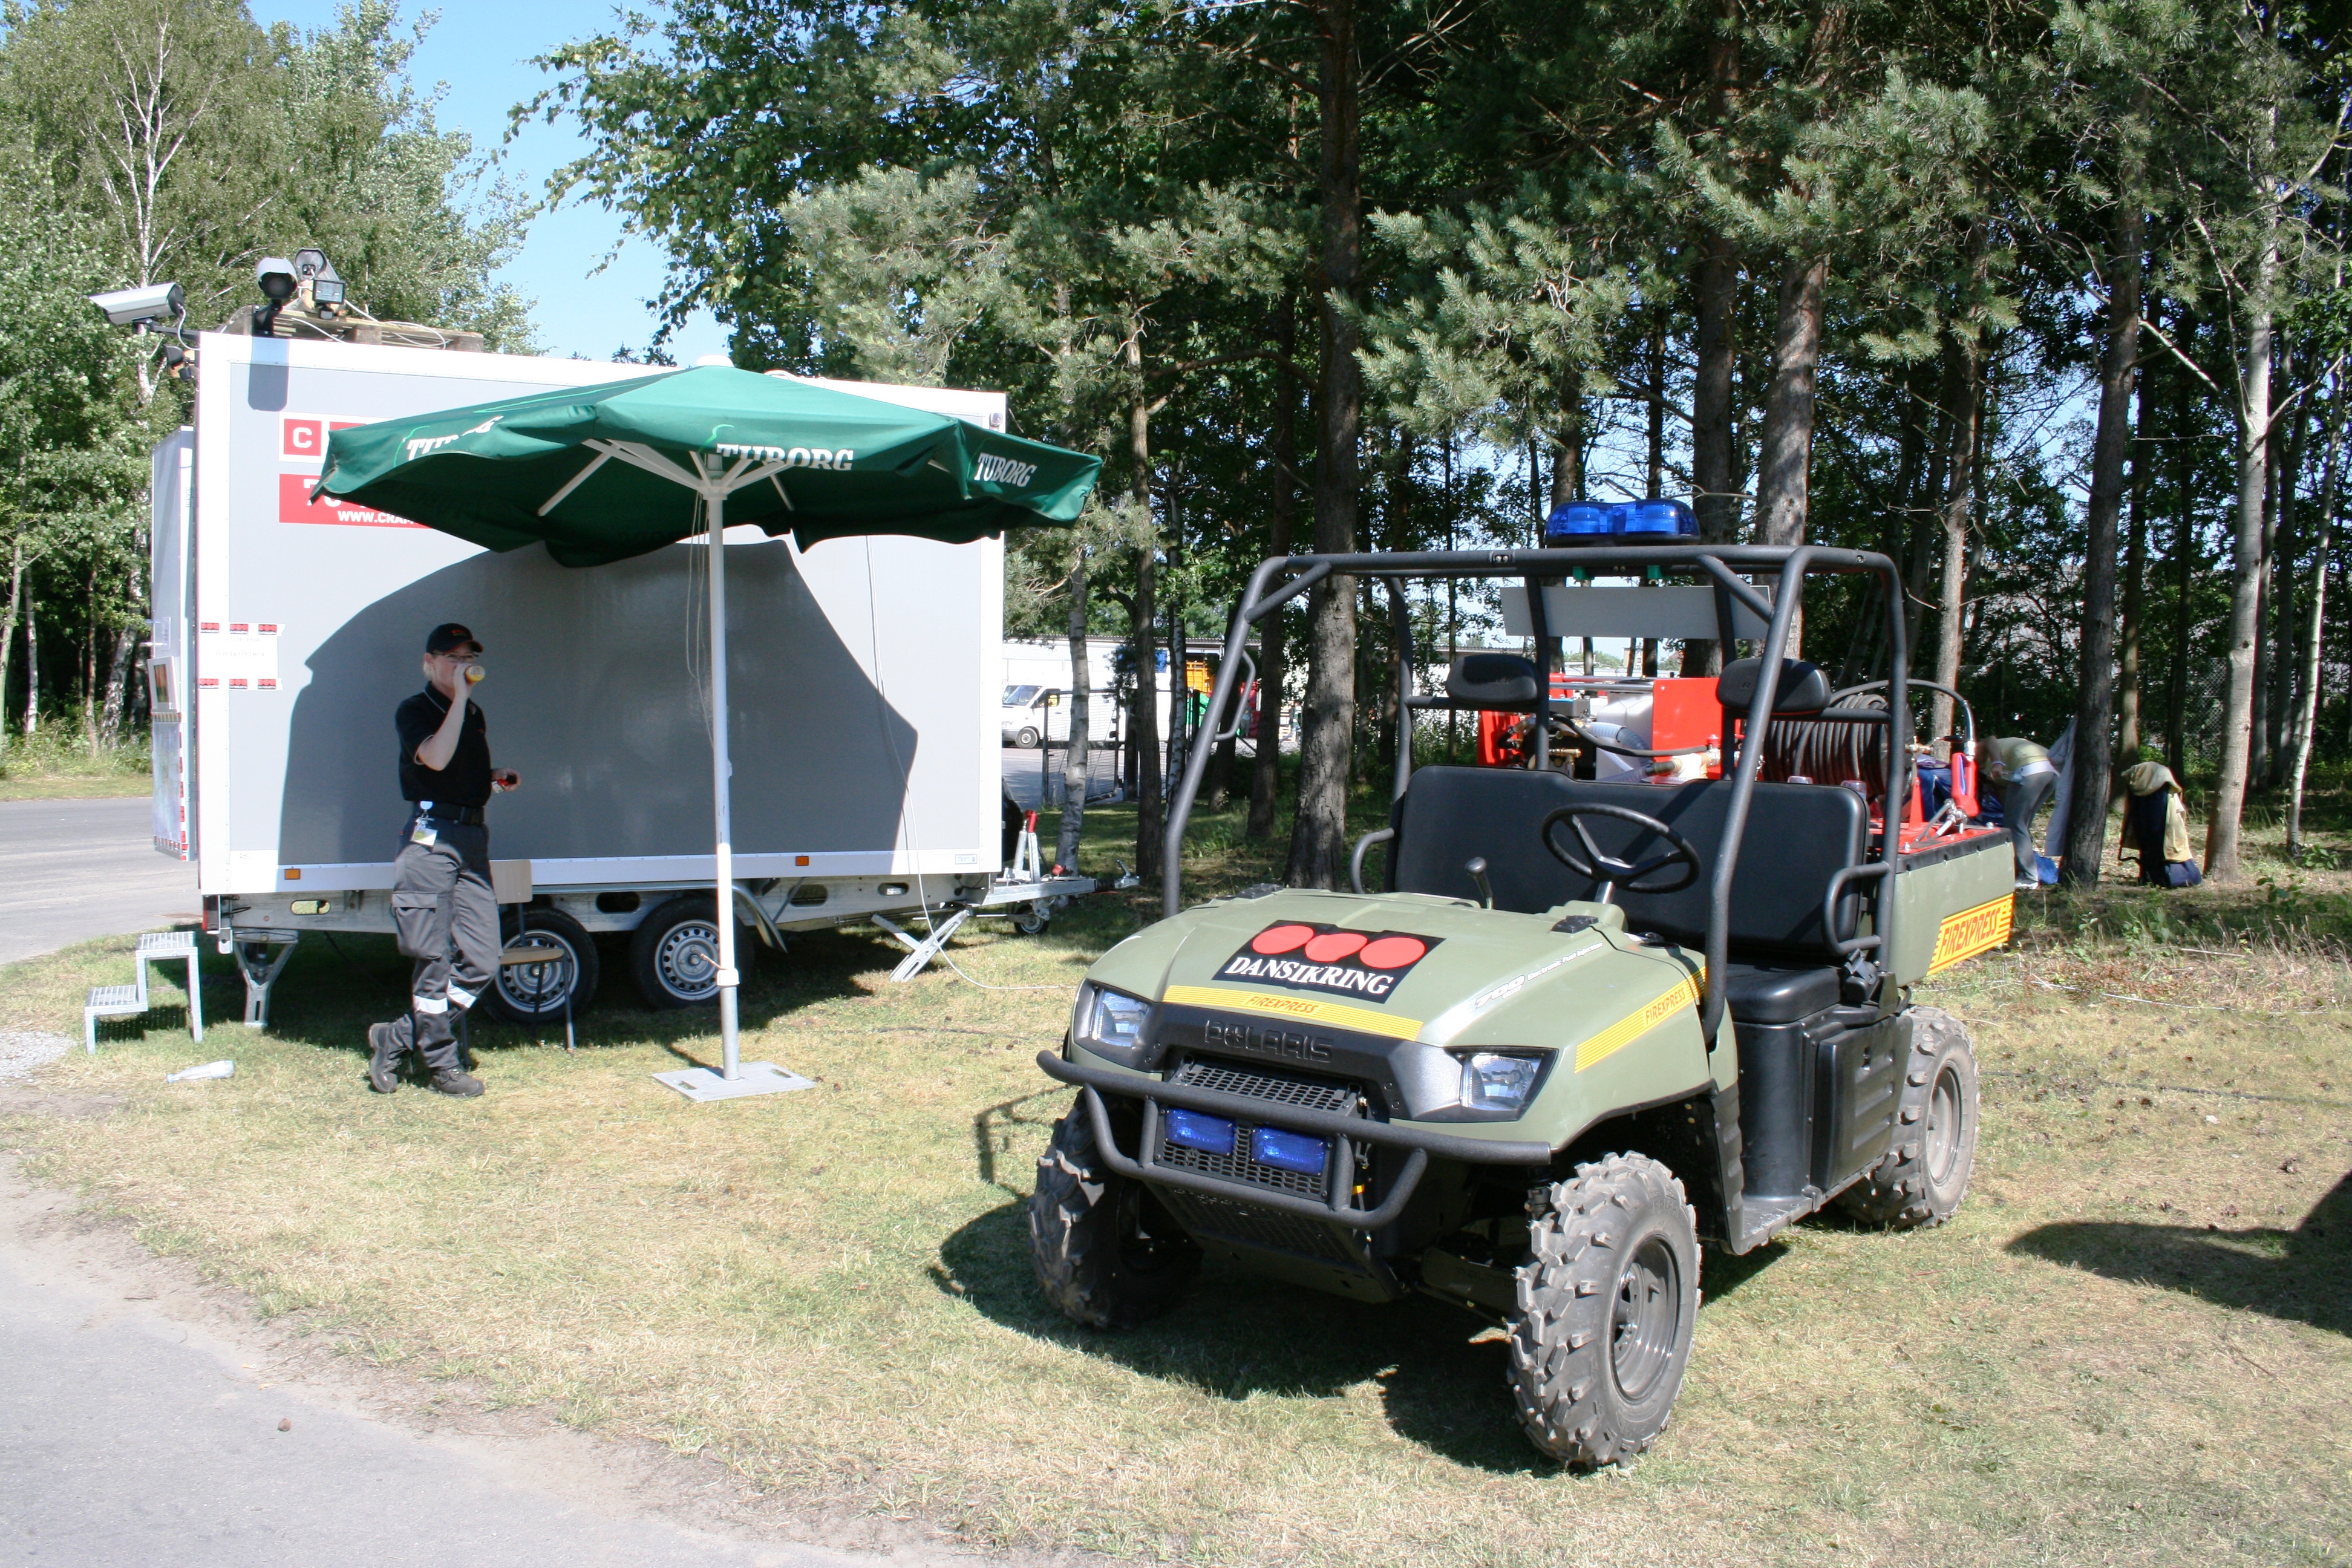 ATV at festival camping ground